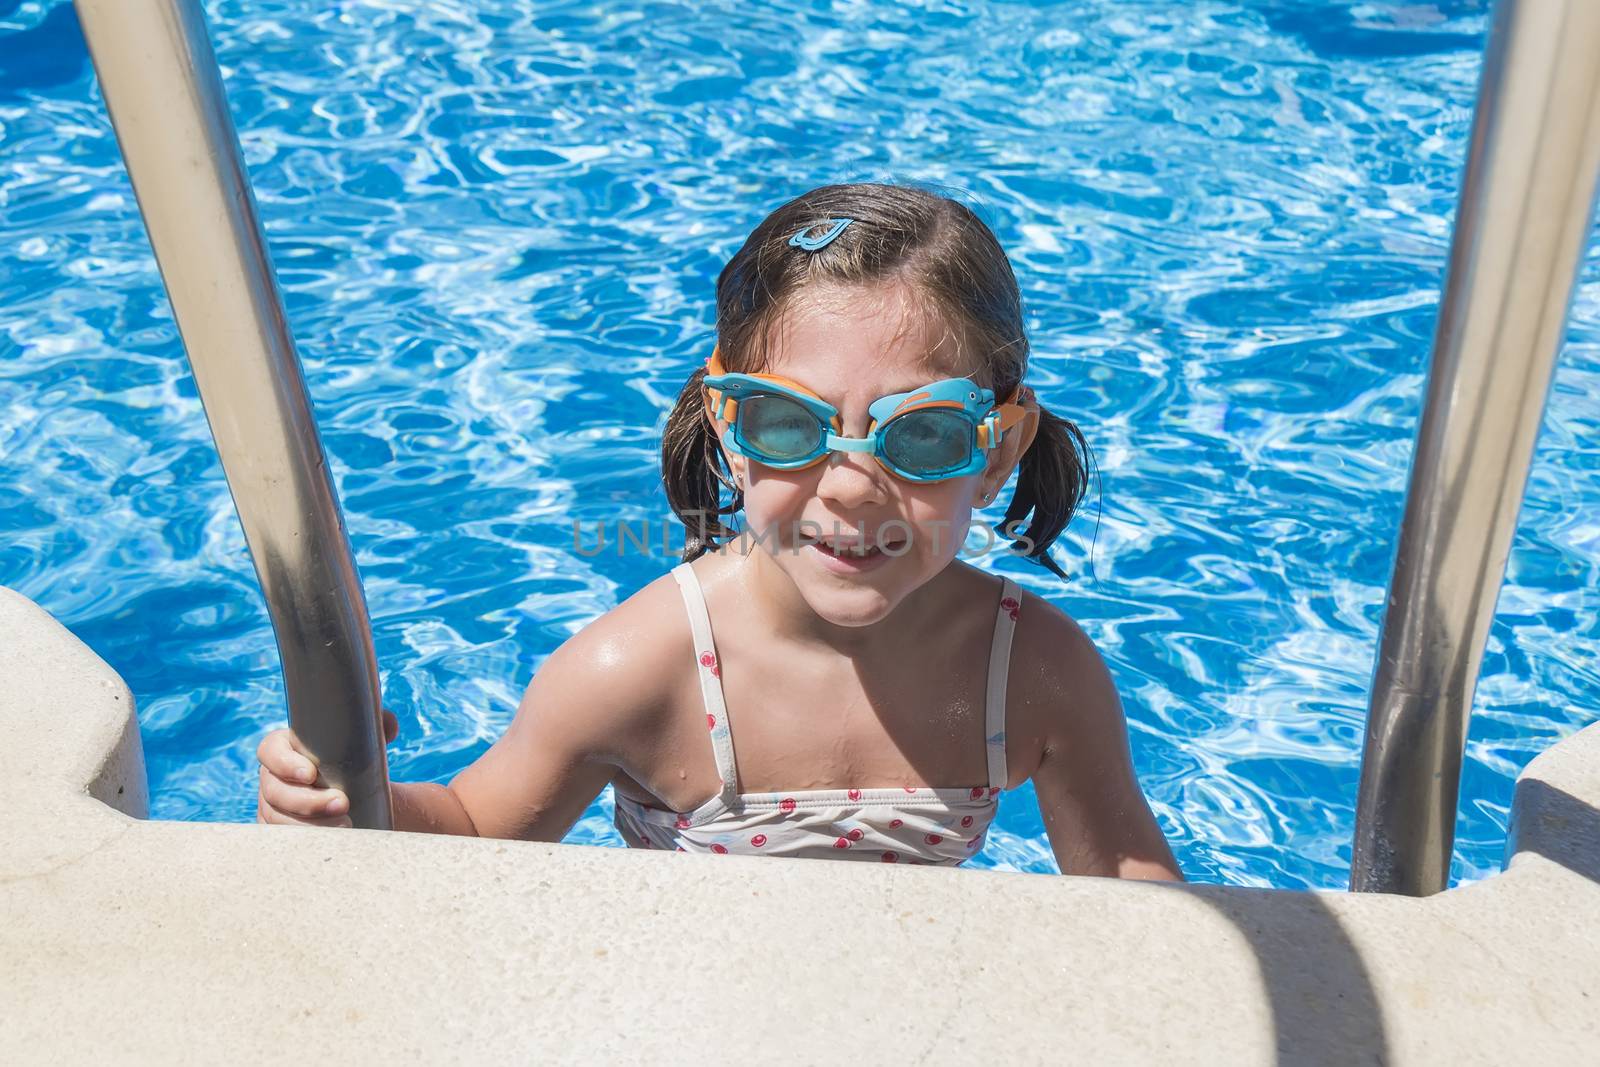 Smiling girl enjoying the pool in summer by max8xam